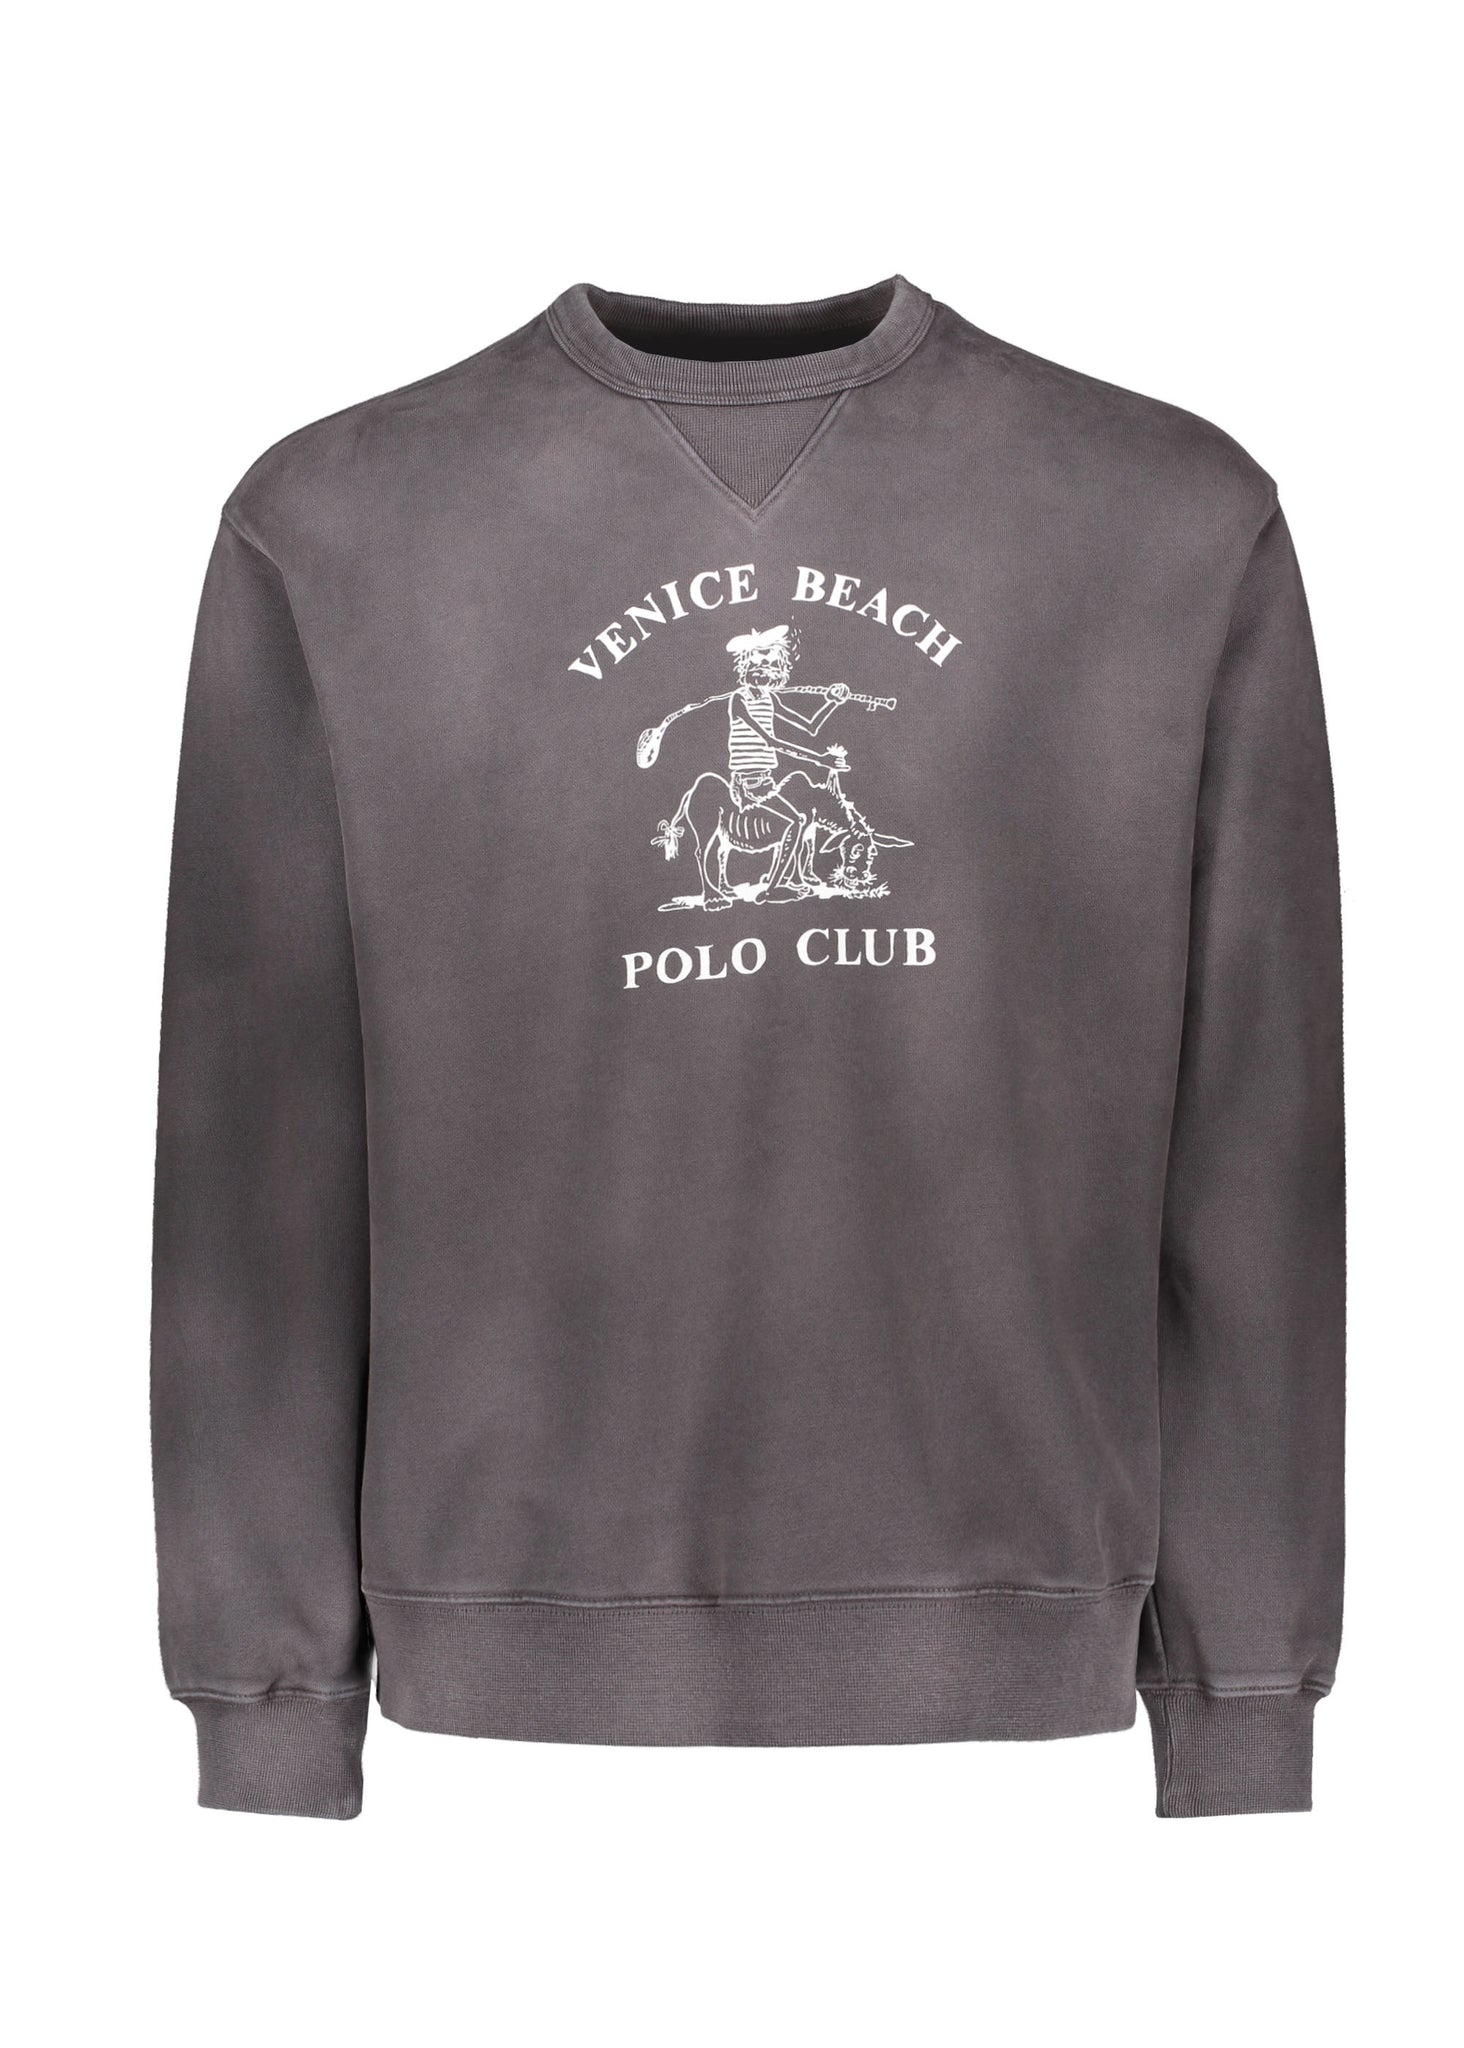 General Admission Polo Club Crewneck Sweatshirt - Black